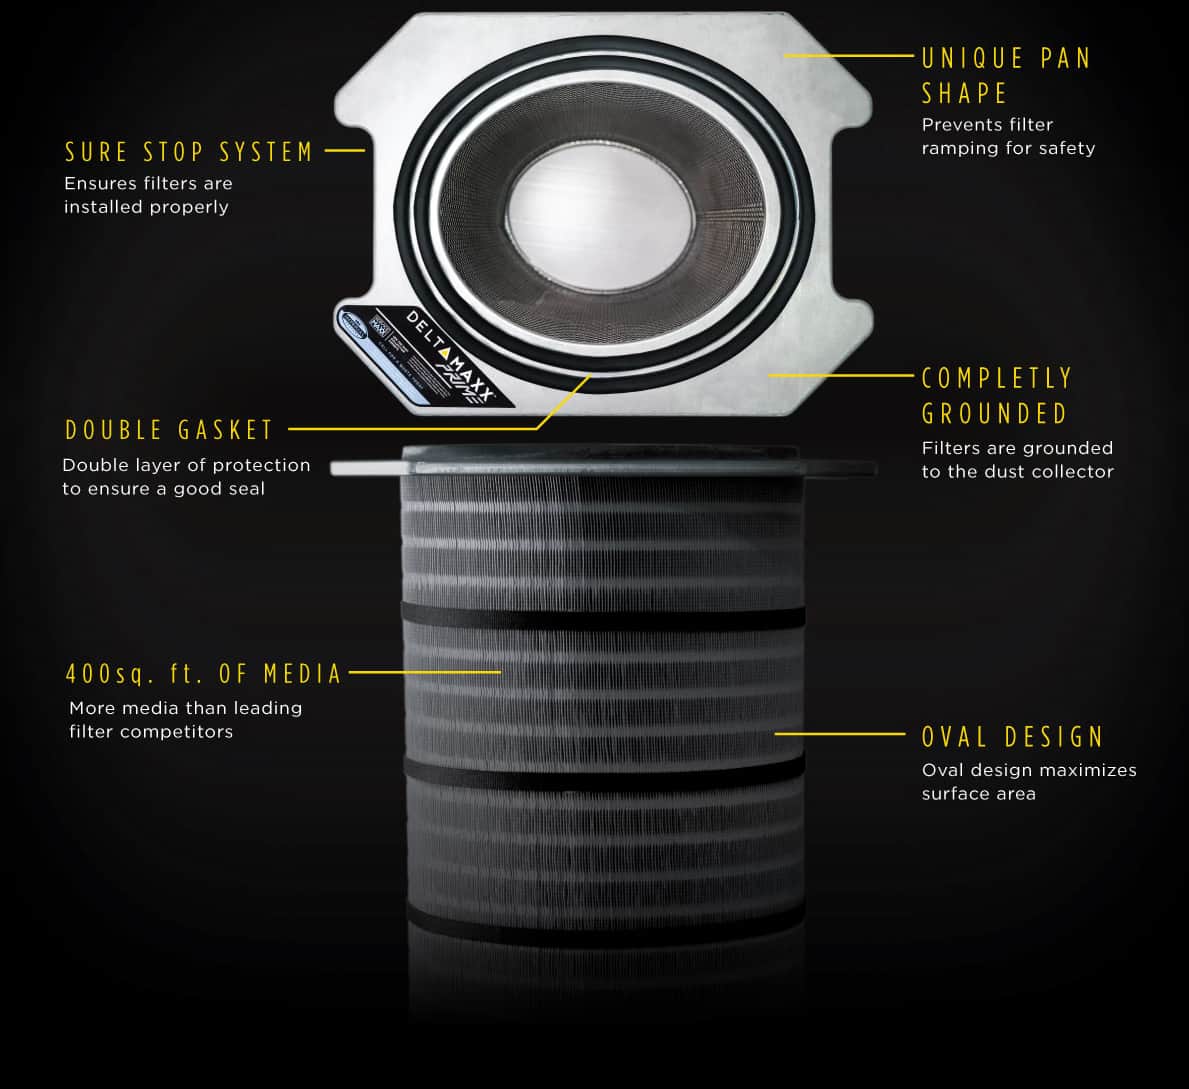 Uniques features of the DeltaMAXX prime cartridge filter